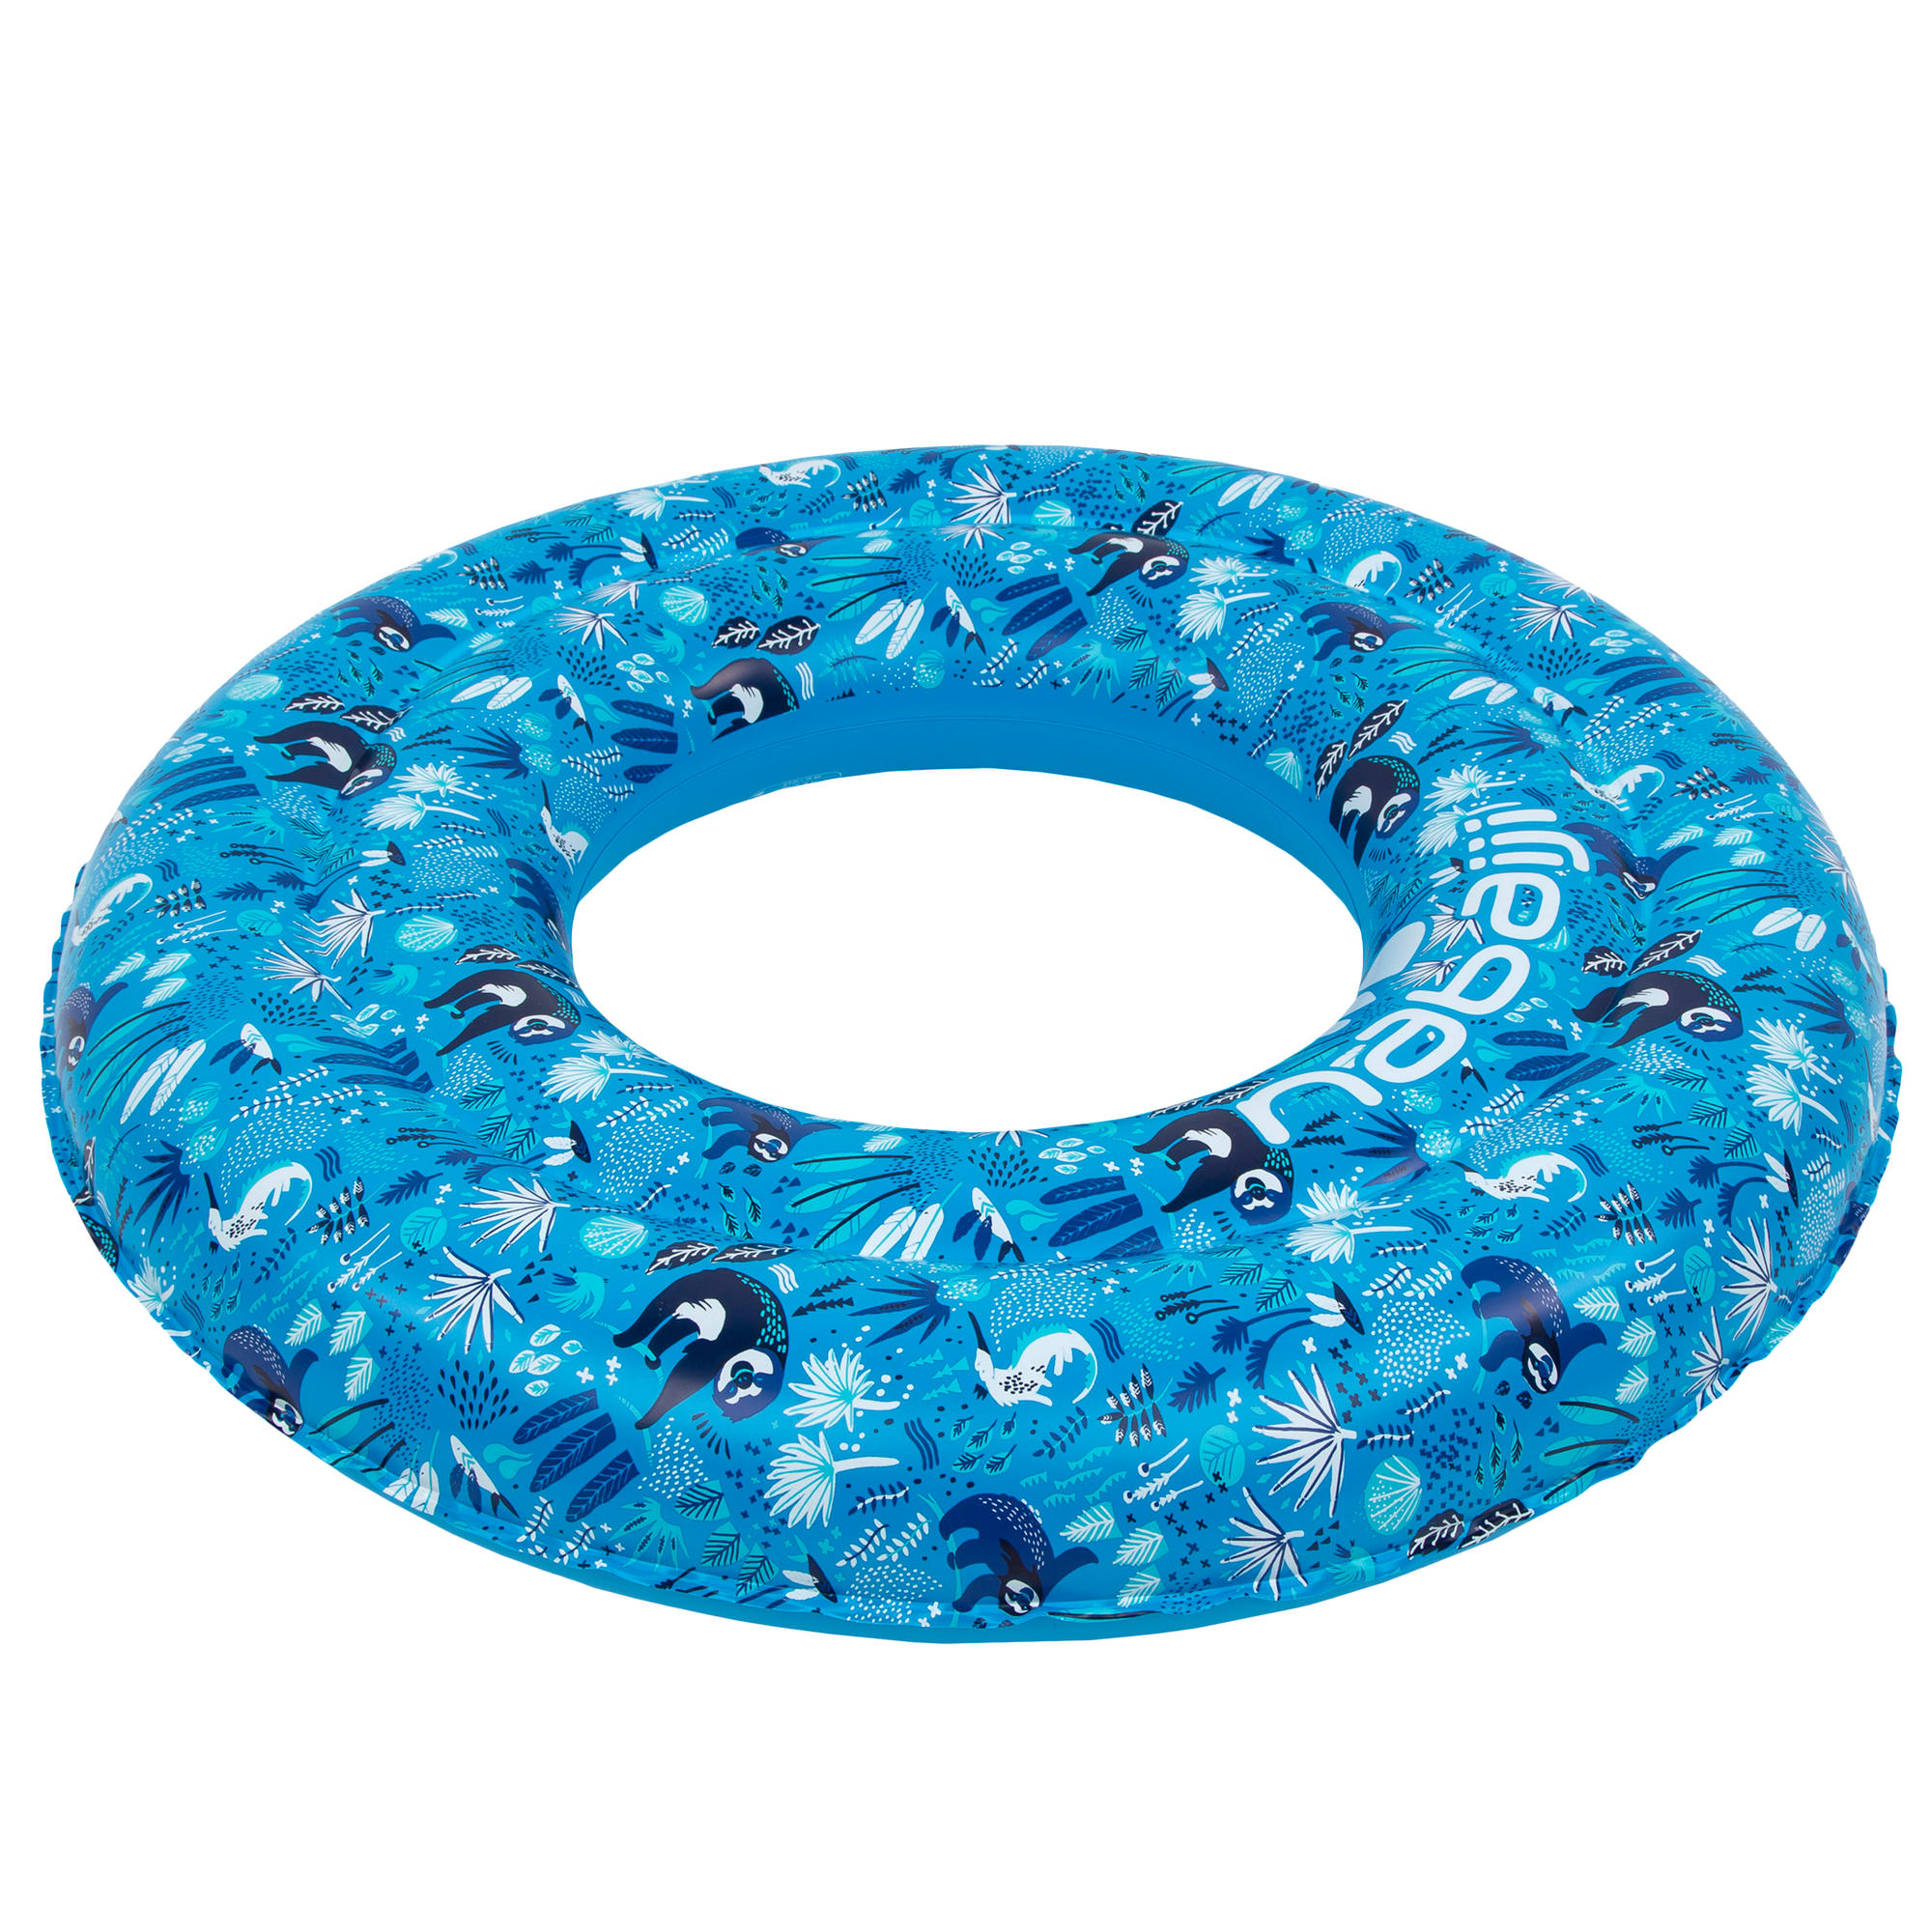 Blue kids' inflatable printed swim ring 